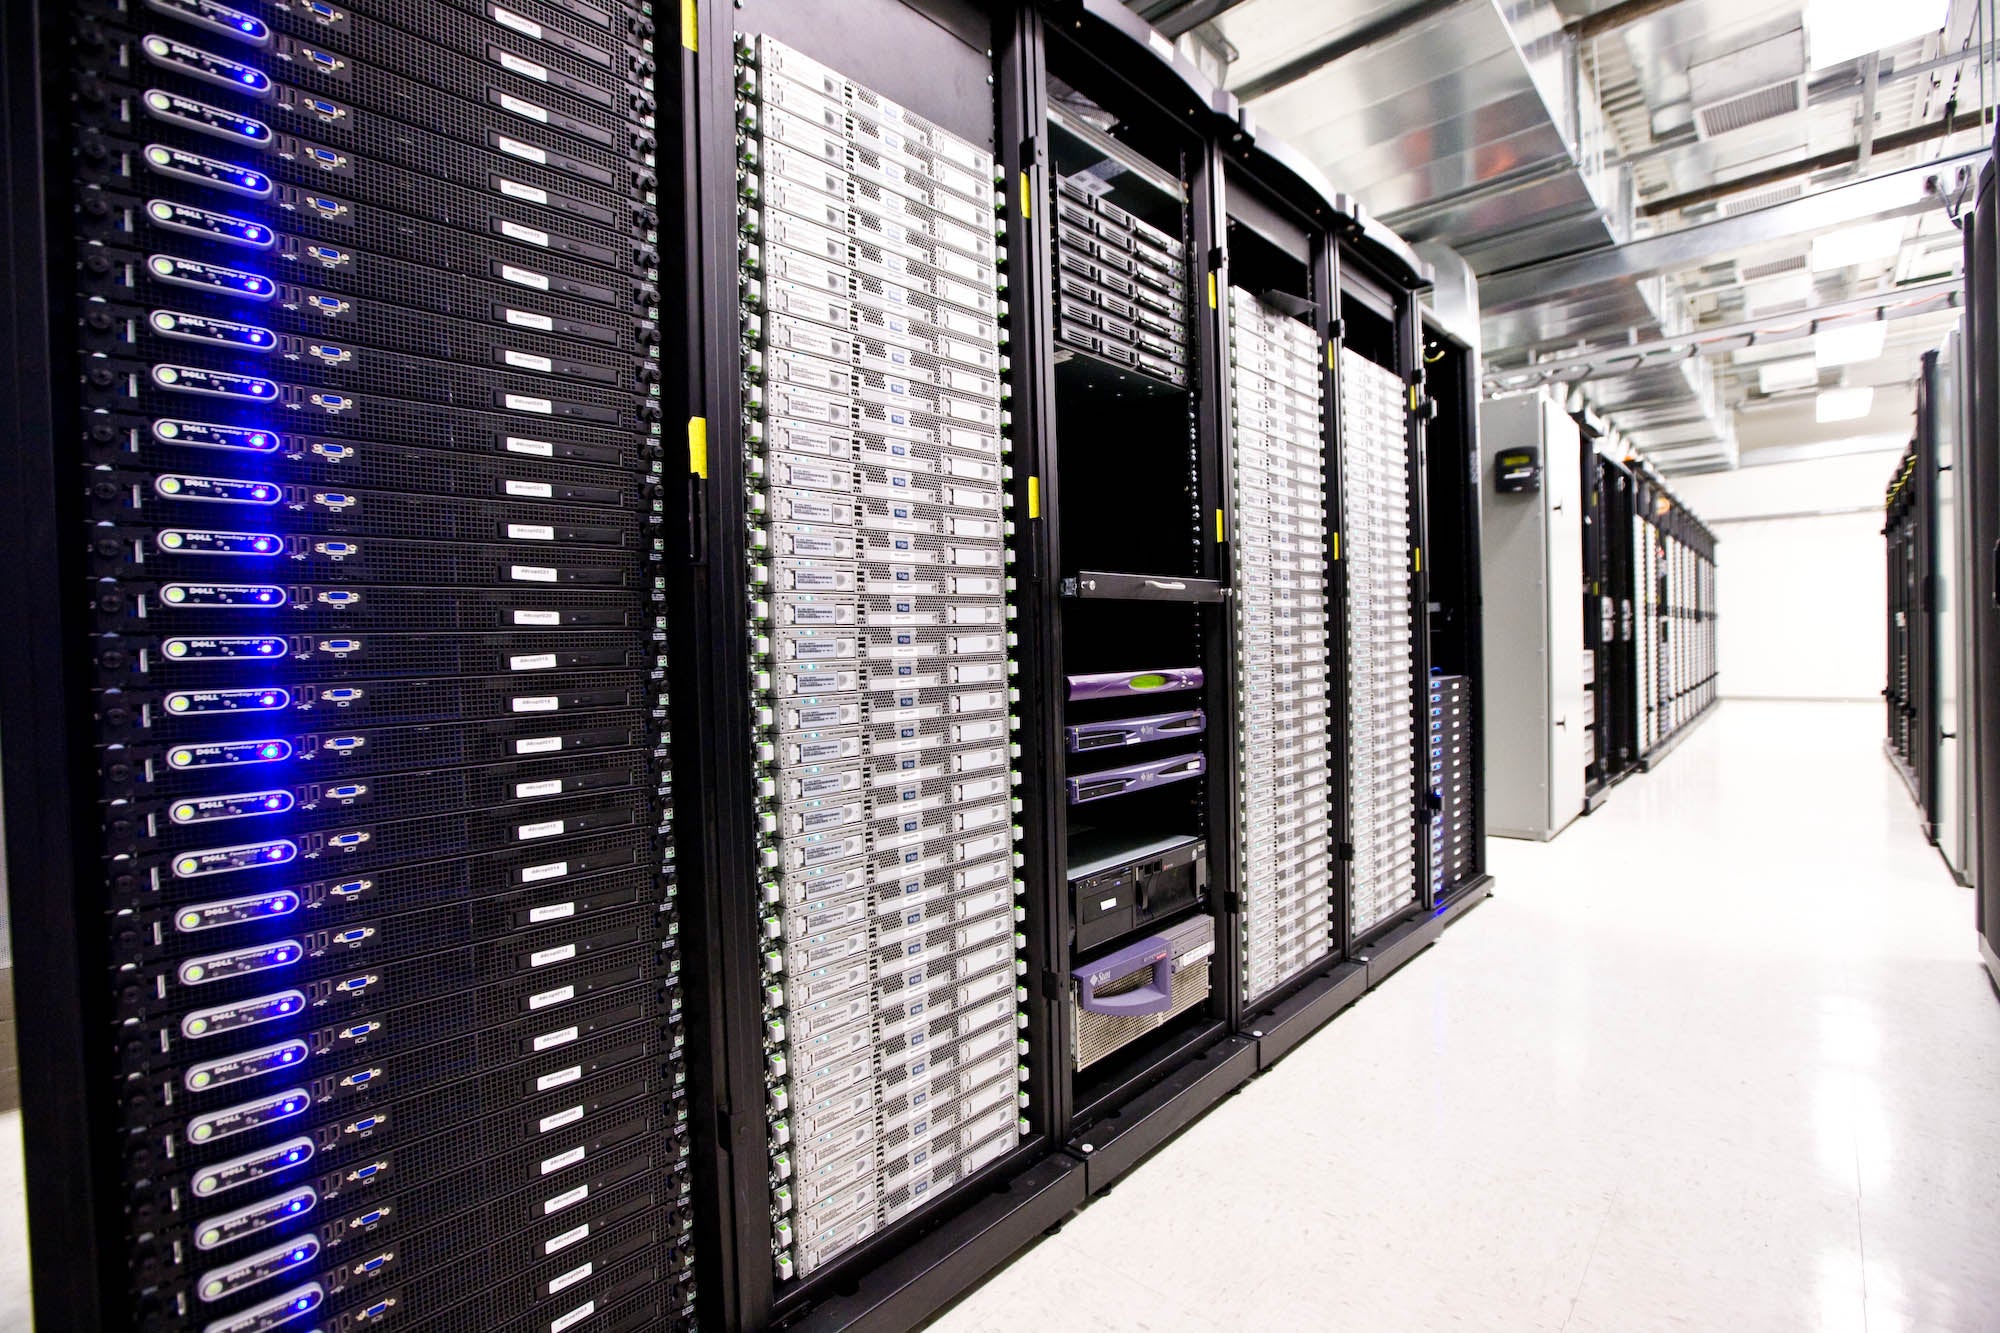 Q3 data centre market dominated by HPE, Cisco & Microsoft